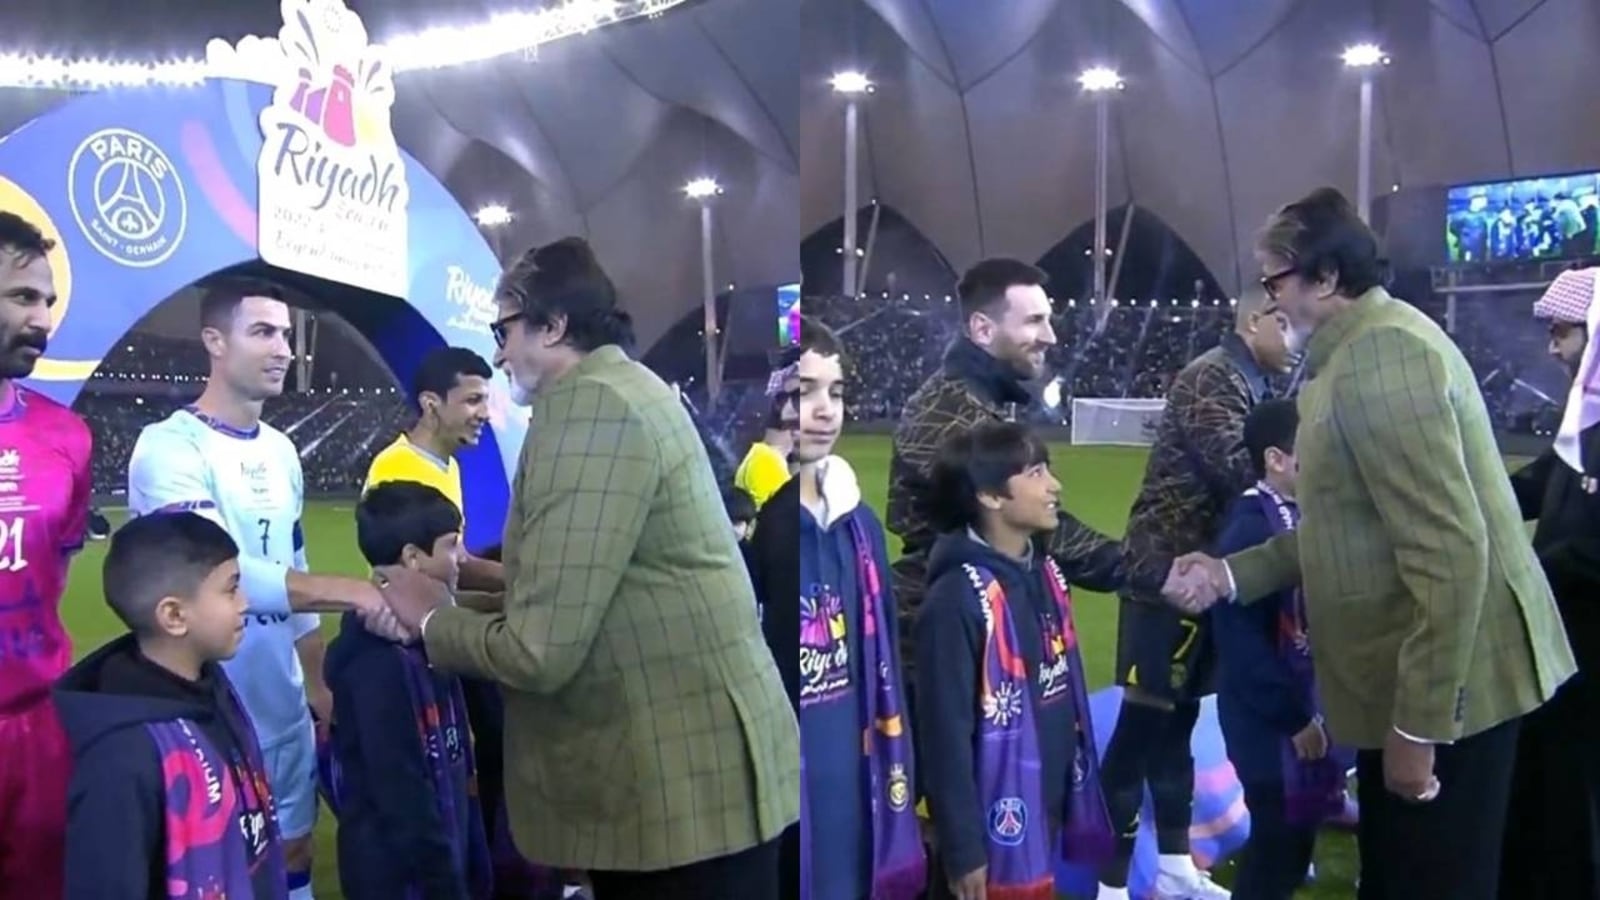 Amitabh Bachchan on meeting Messi, Ronaldo in Riyadh ‘What an evening